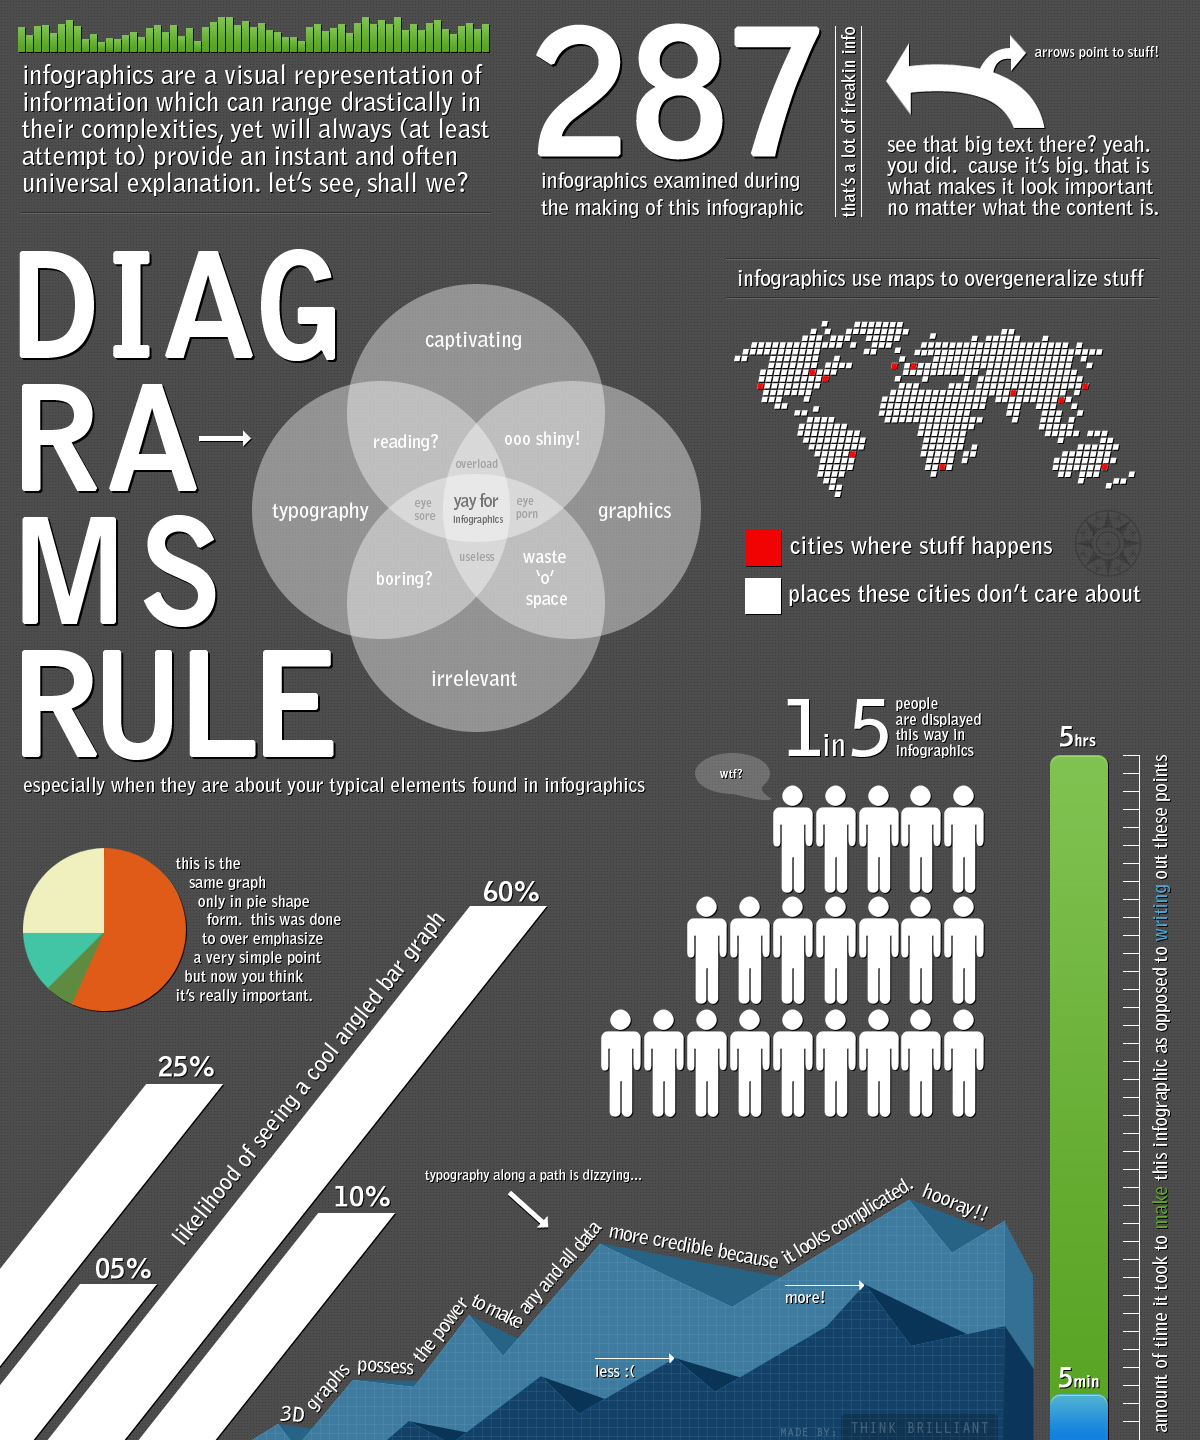 http://www.thinkbrilliant.com/infographic/Infographic.jpg